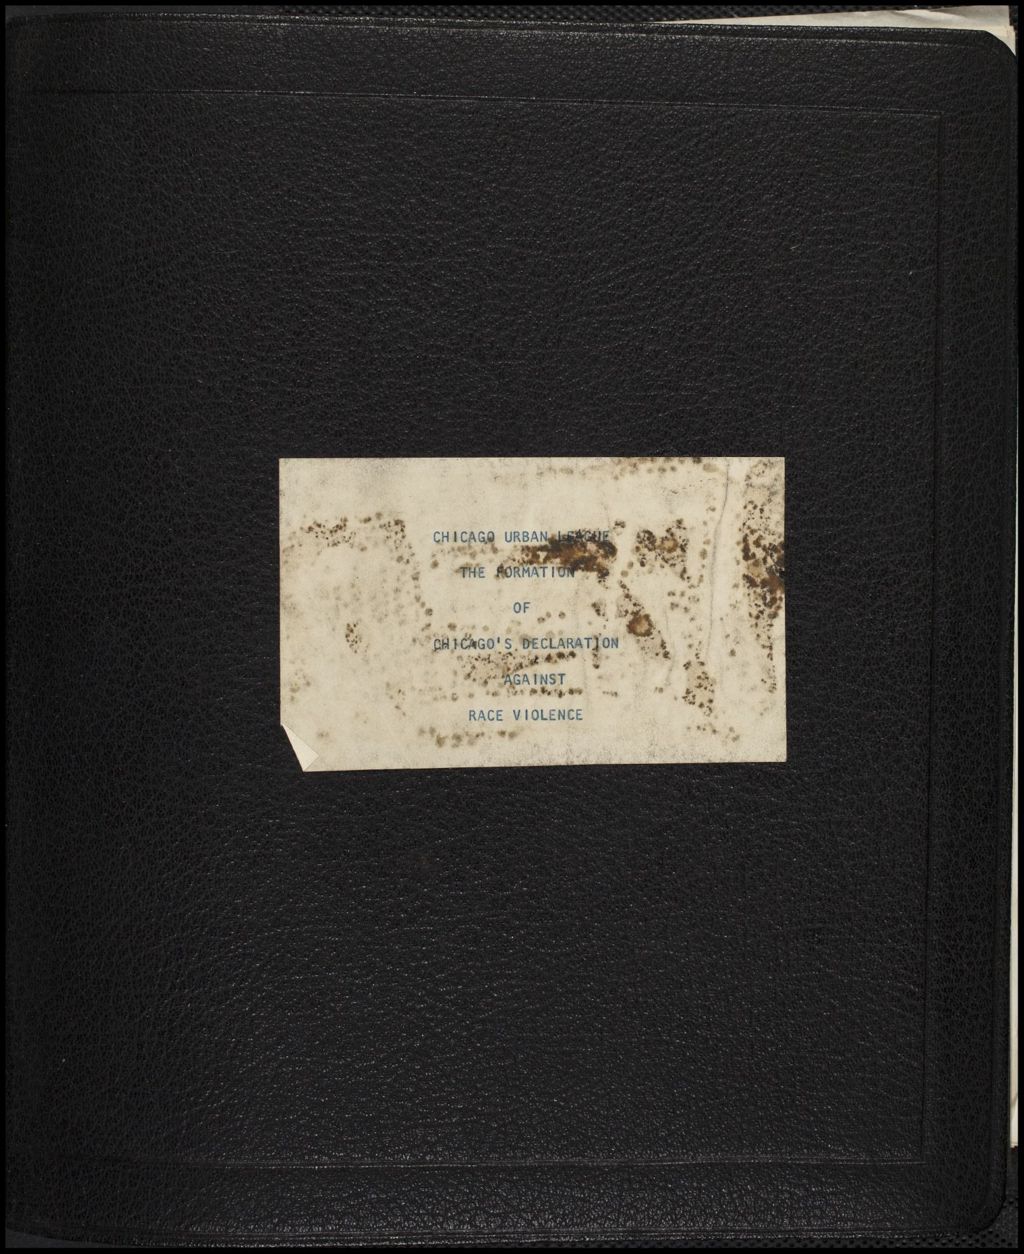 Miniature of Chicago's Declaration Against Racial Violence, 1961 (Folder III-1813)